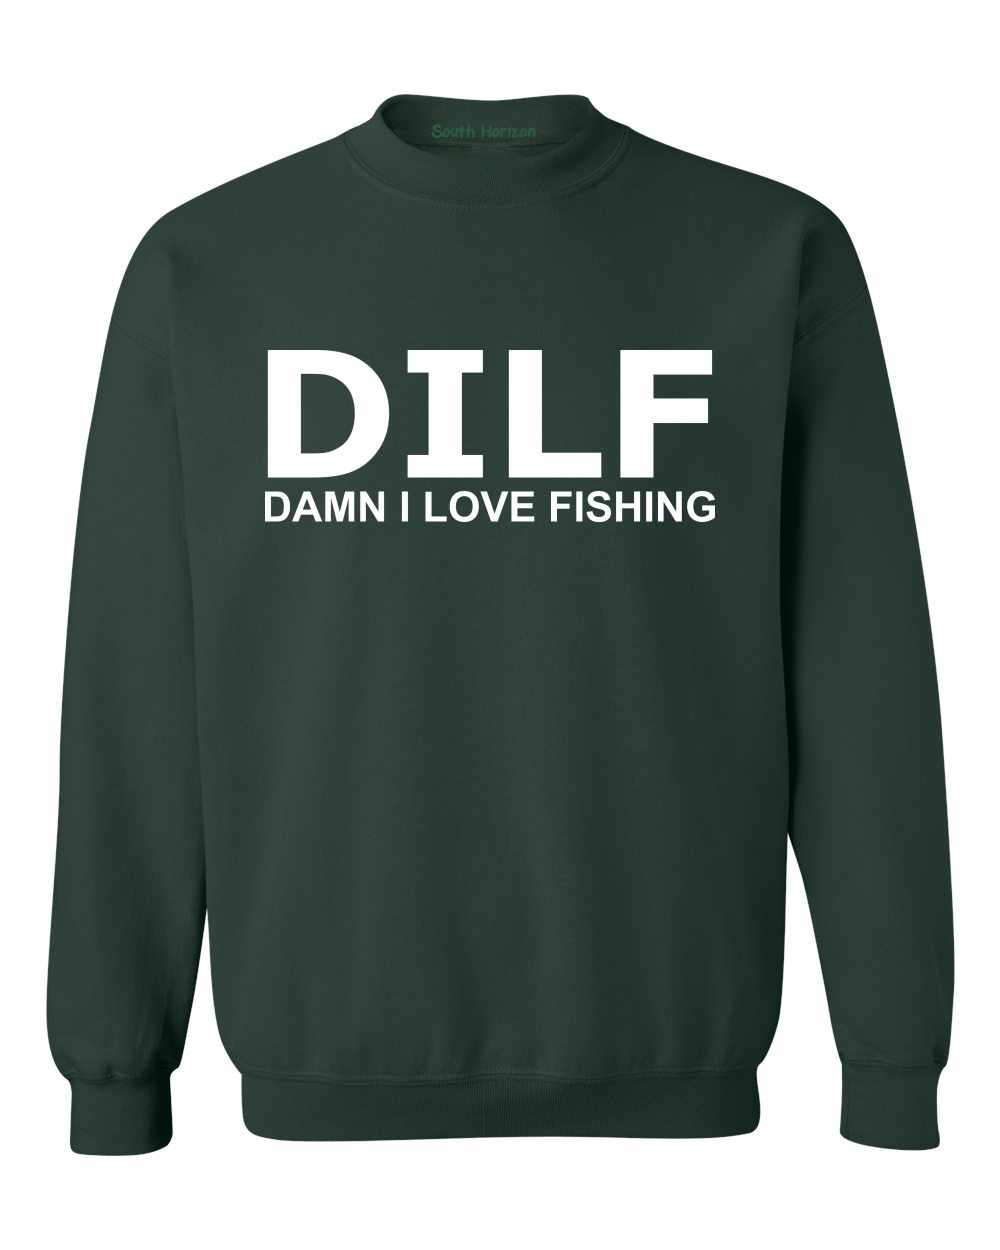 Dilf Damn I Love Fishing On Sweatshirt in 9 Colors, Black / 2XL